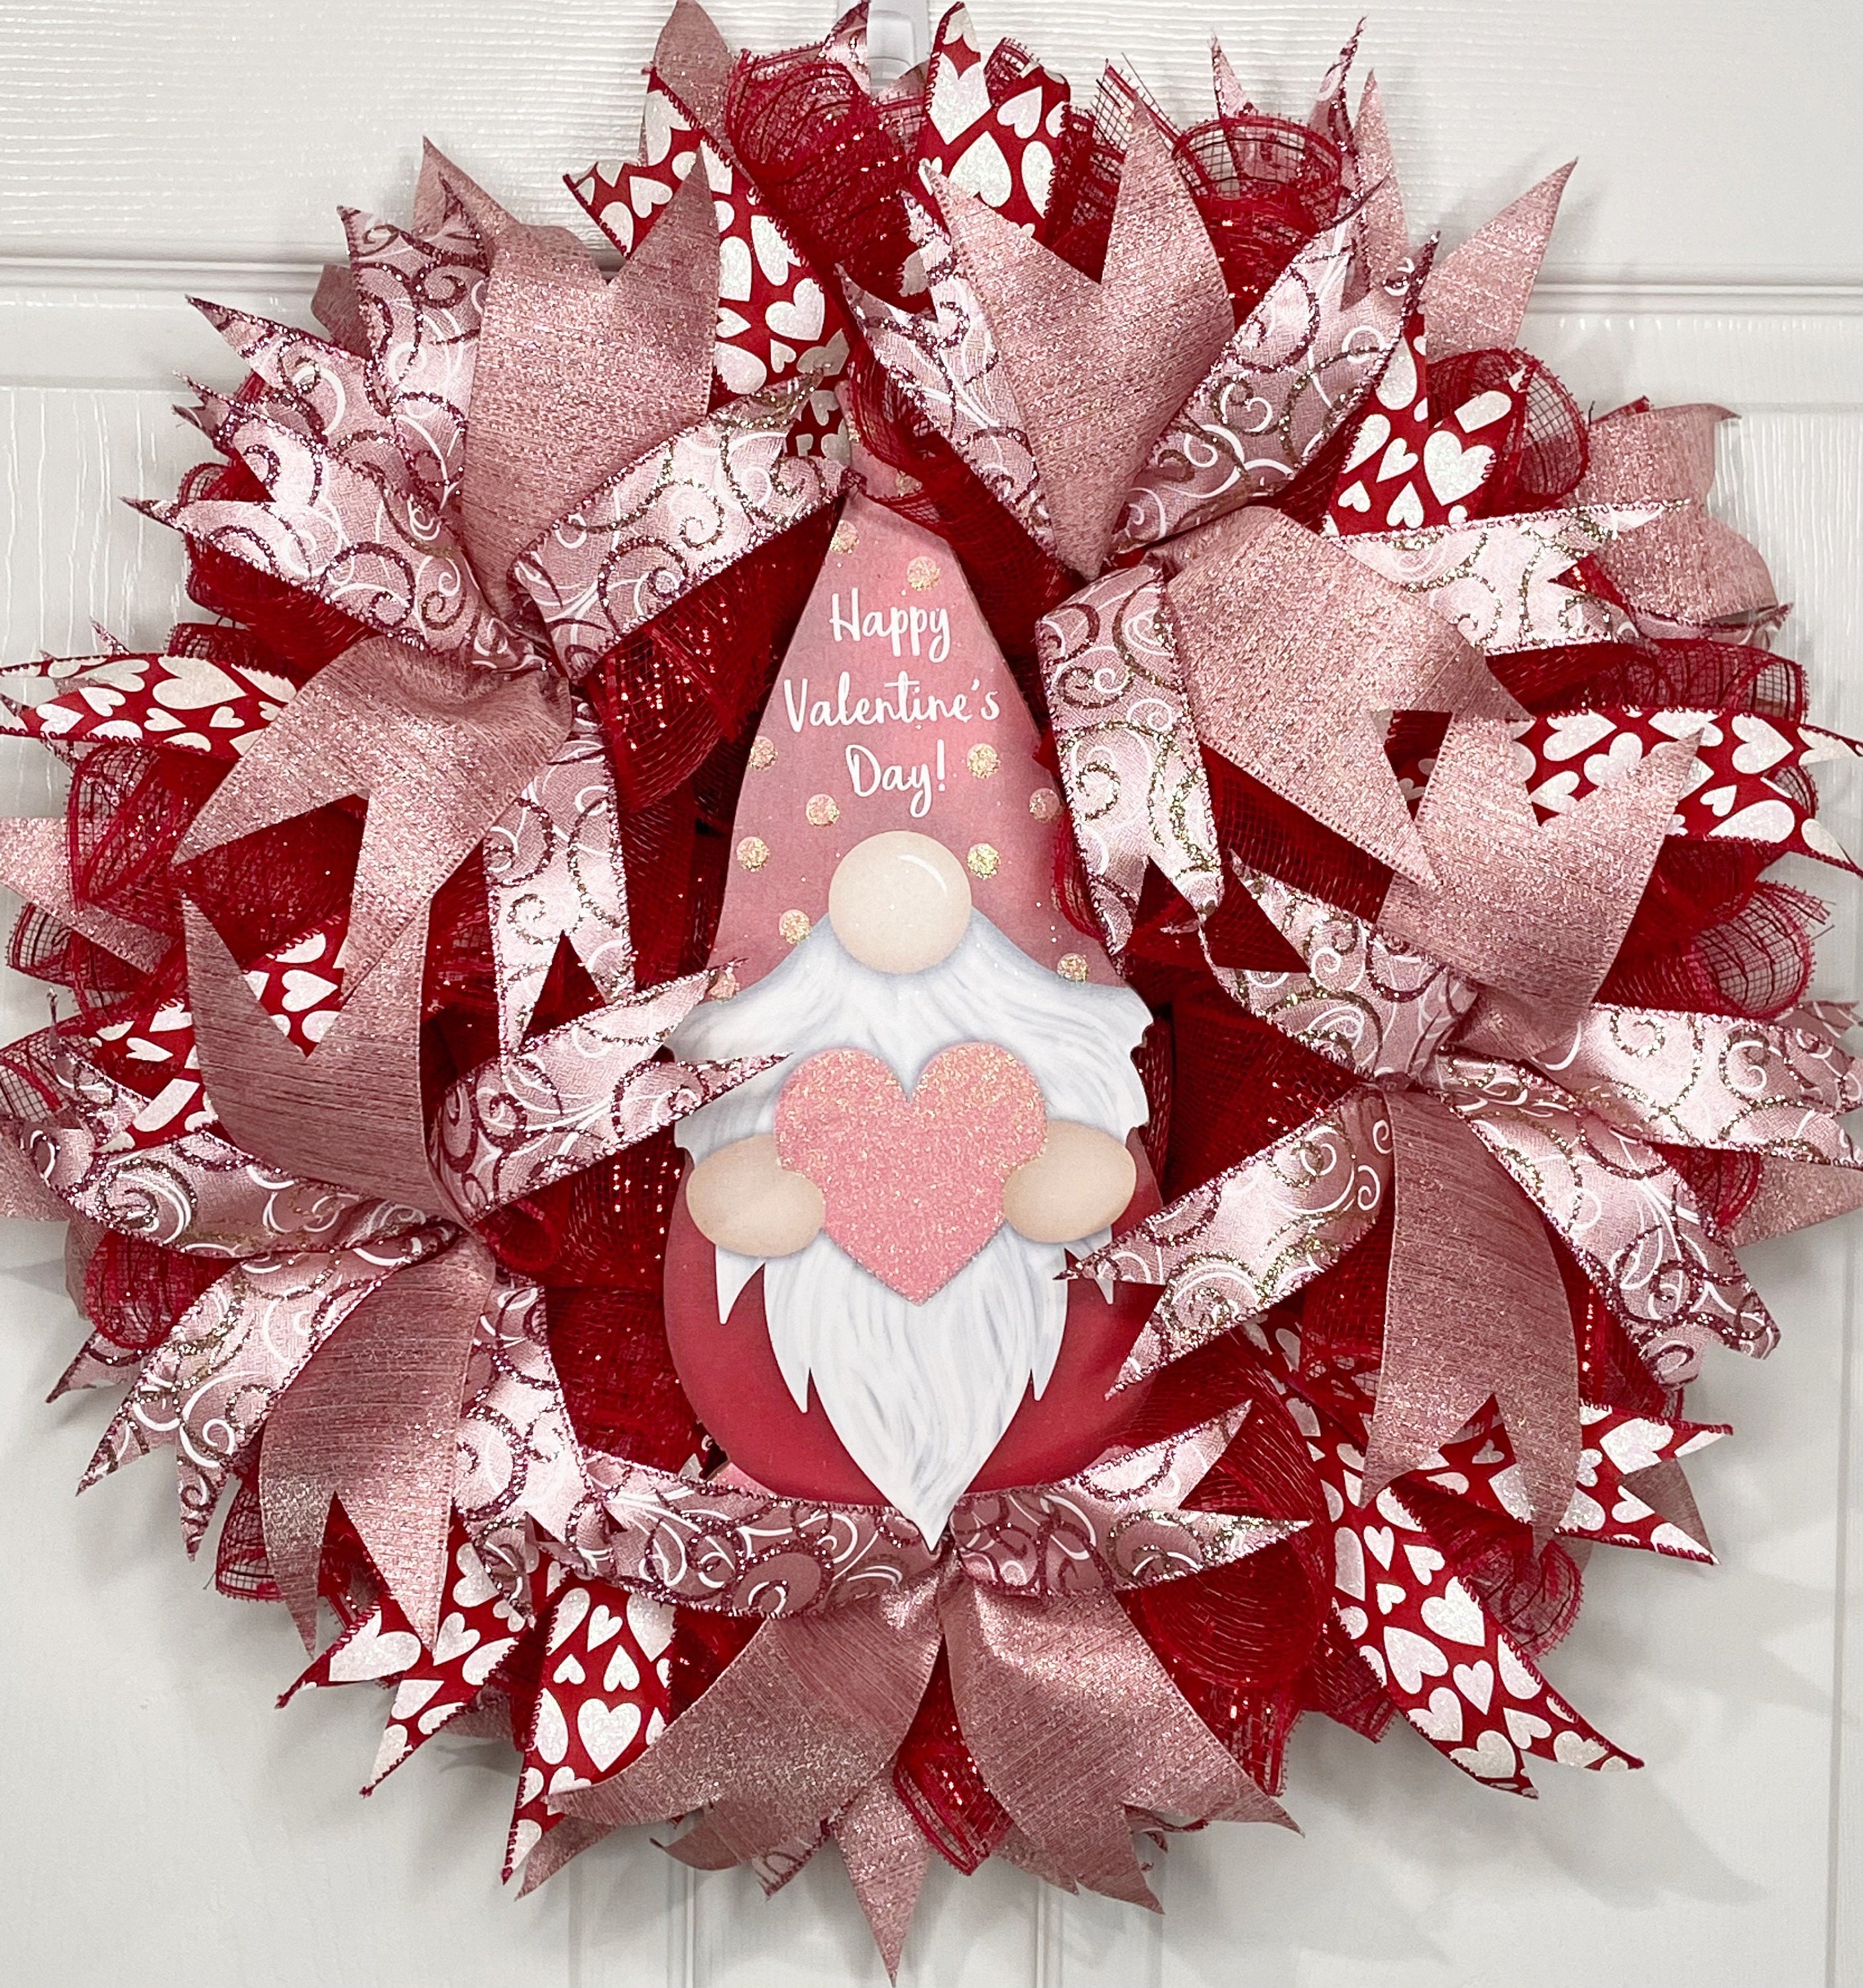 10 Valentine's Day Gift Ideas for Kids - The Homespun Hydrangea